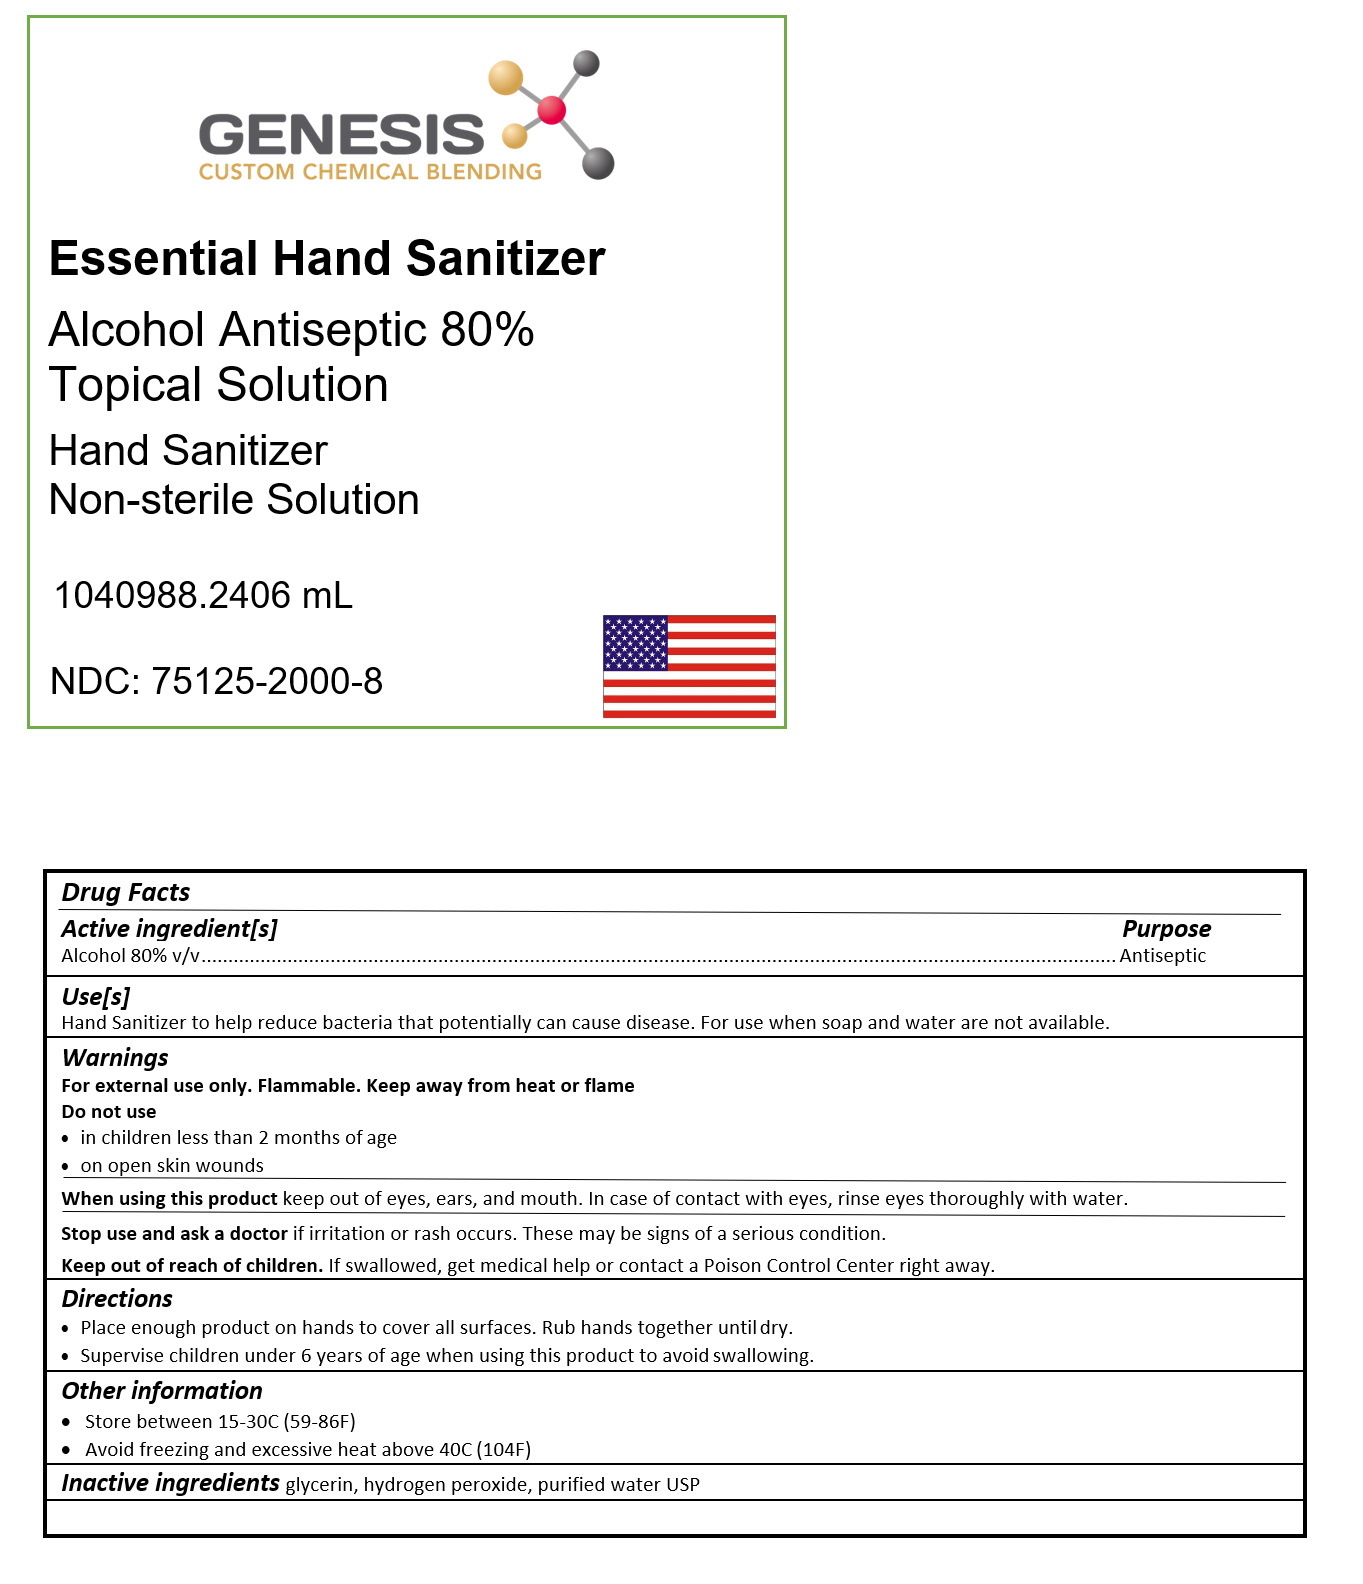 Ethanol80-handsan-consumer-75125-2000-8